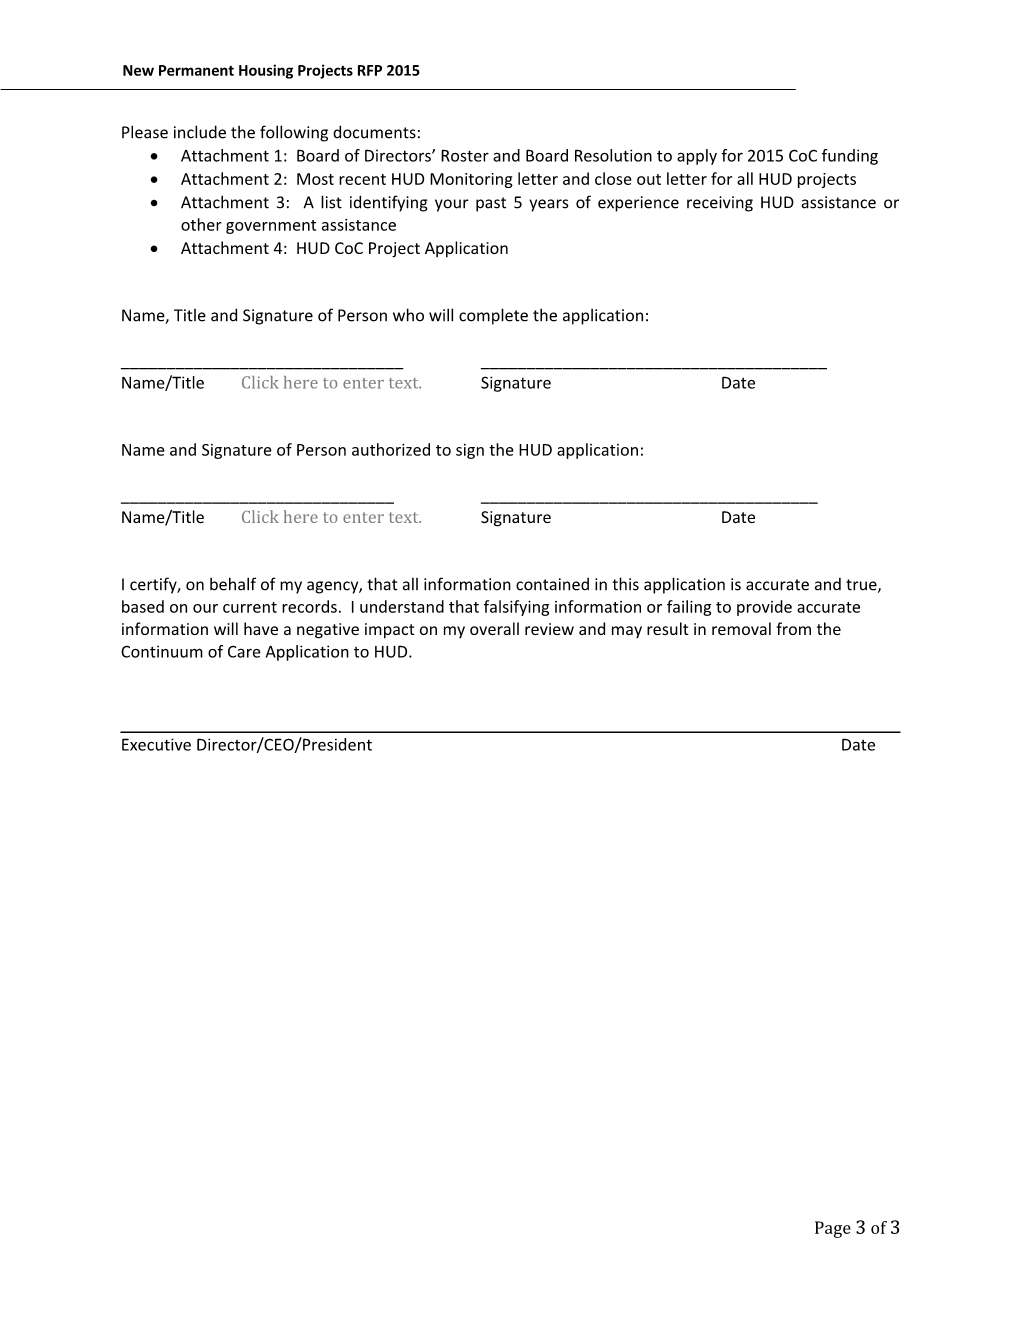 EXHIBIT 1: Lead Agency Information Form